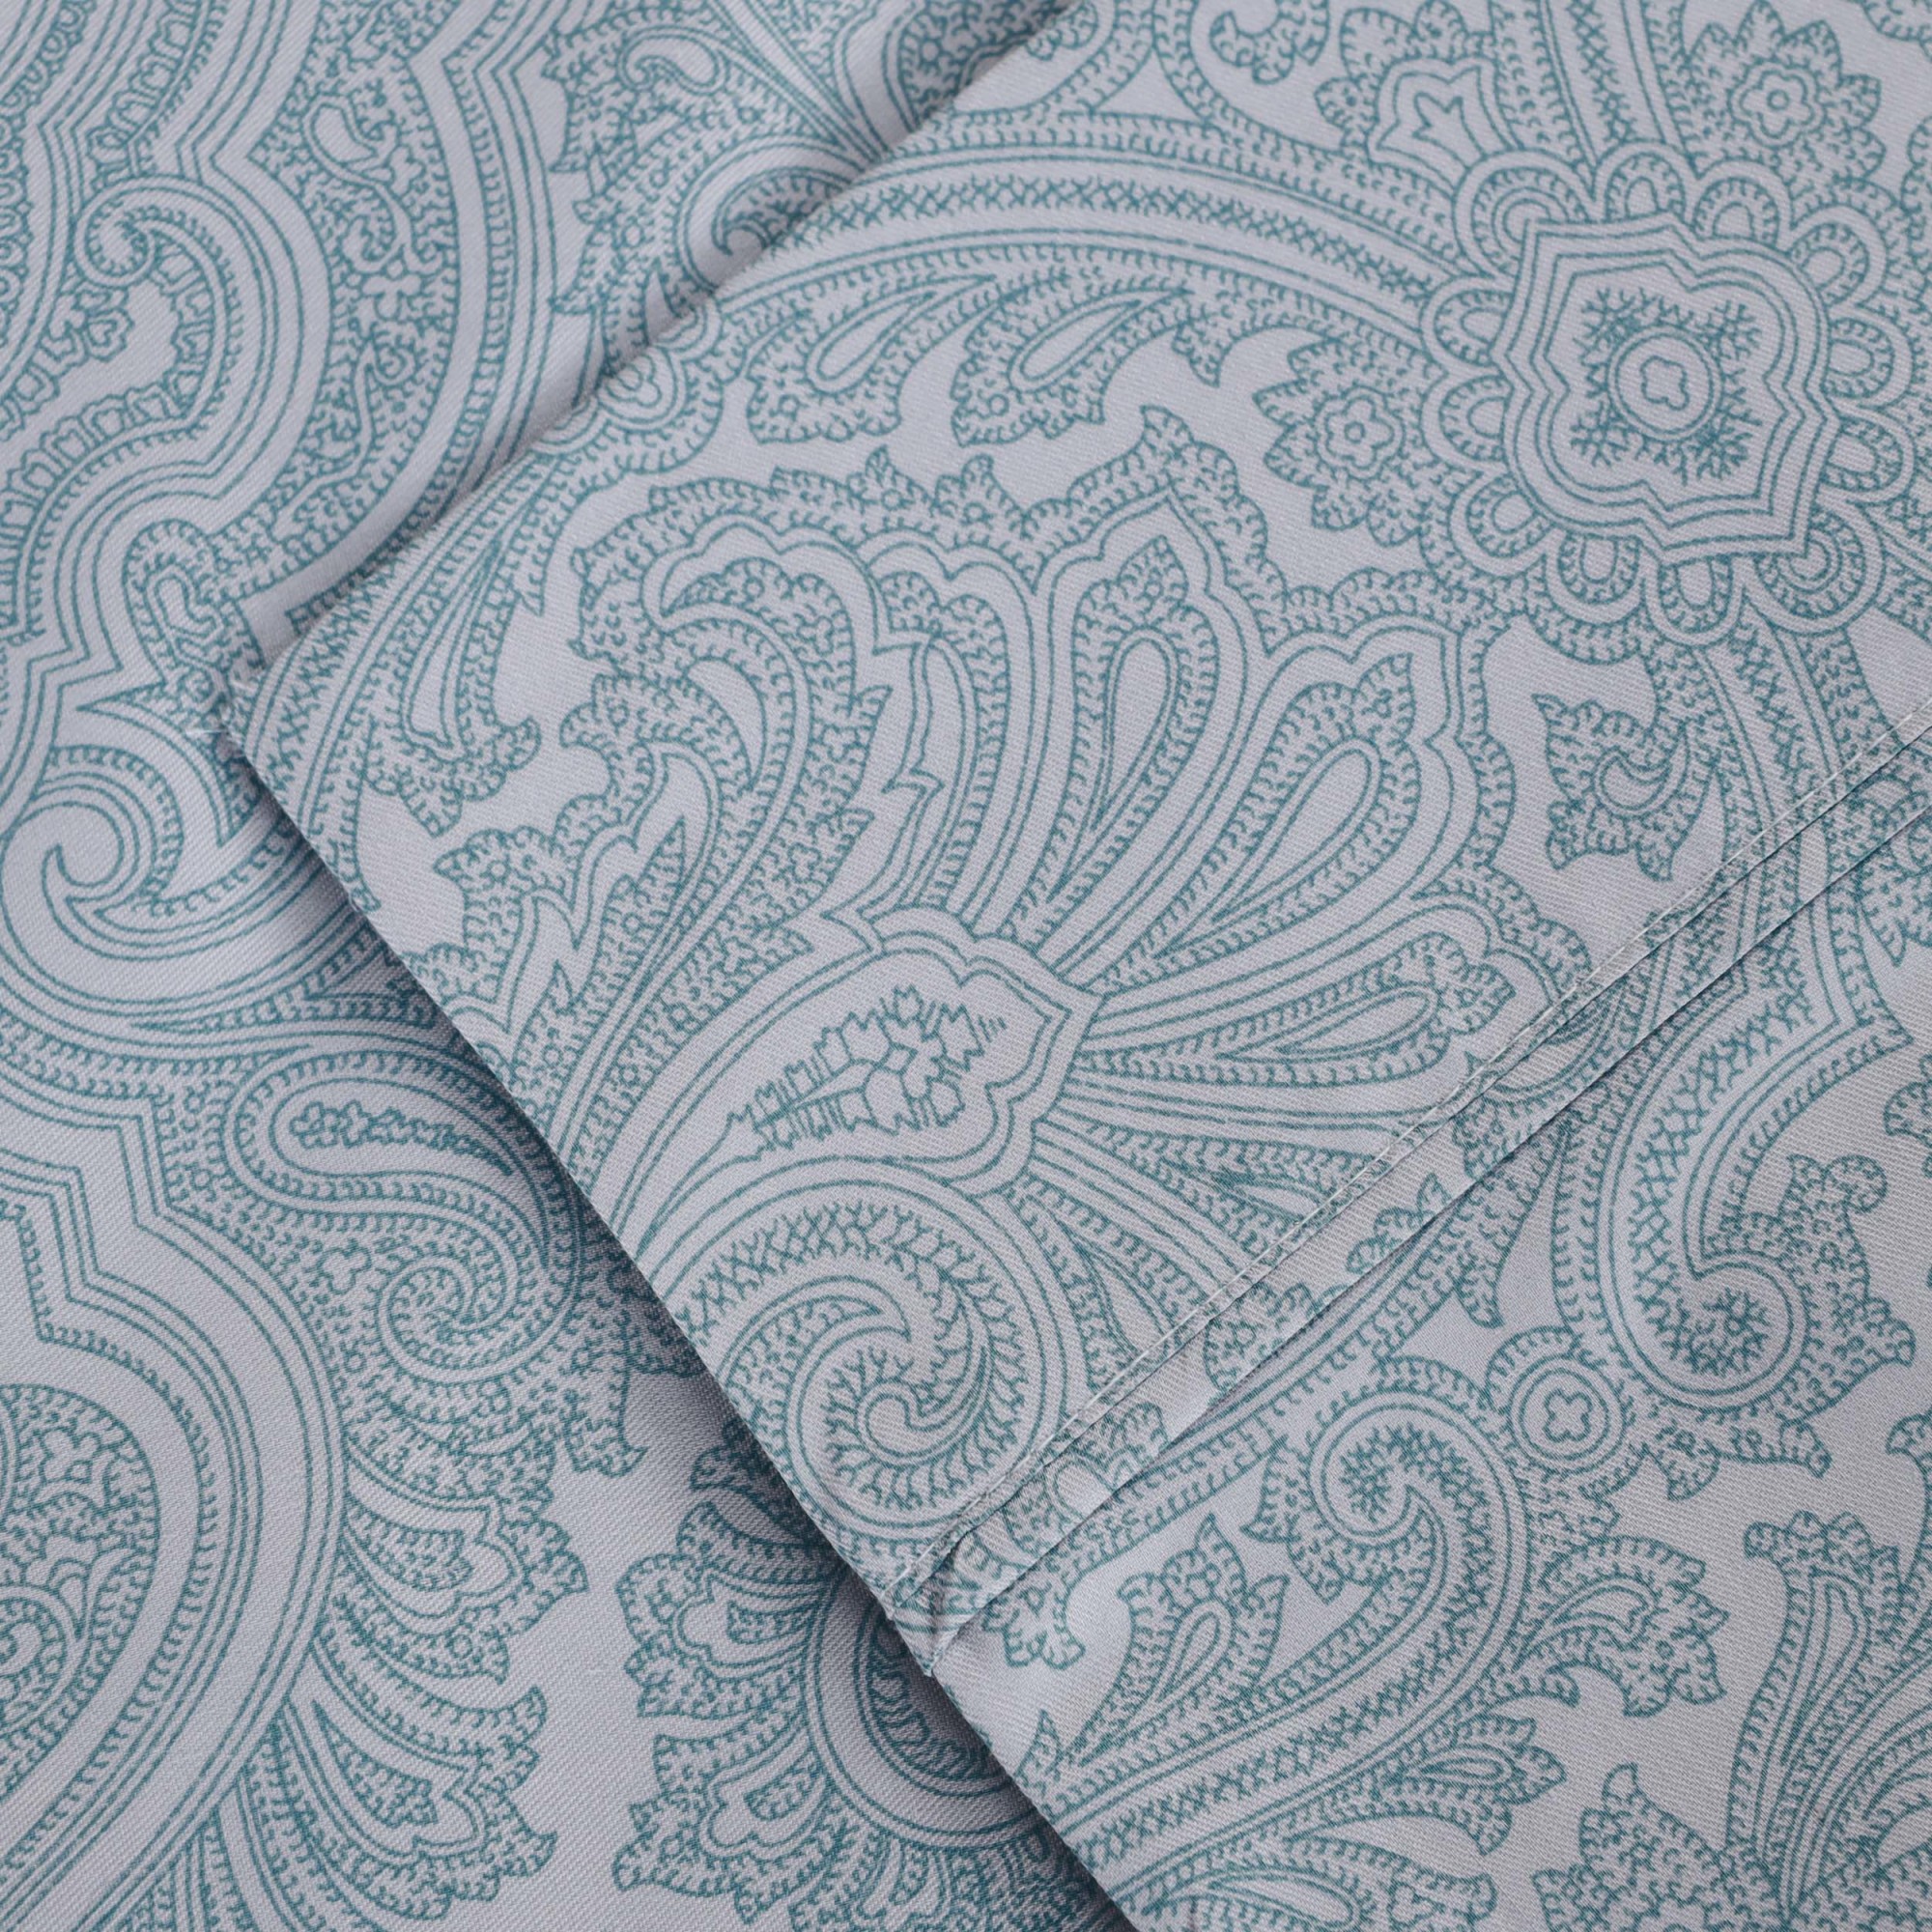 Superior 600 Thread Count Italian Paisley Cotton Blend Sheet Set, Full, Blue - image 4 of 7